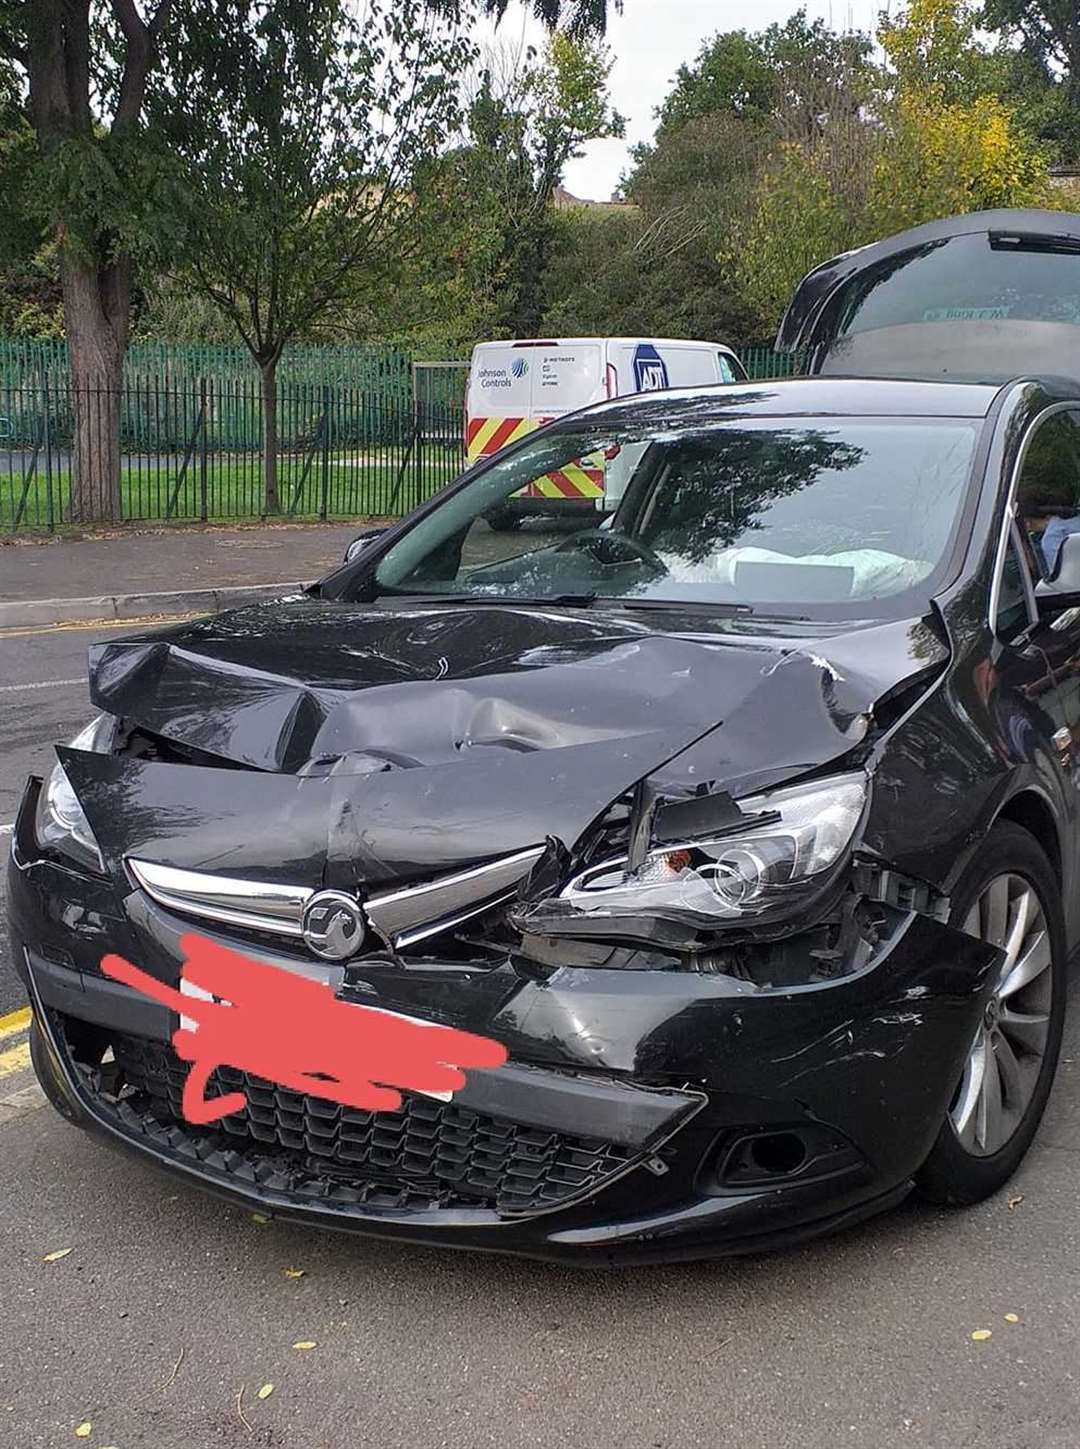 A car was badly damaged following a crash on Old Manor Way, Barnehurst. Photo: Clare Lodge